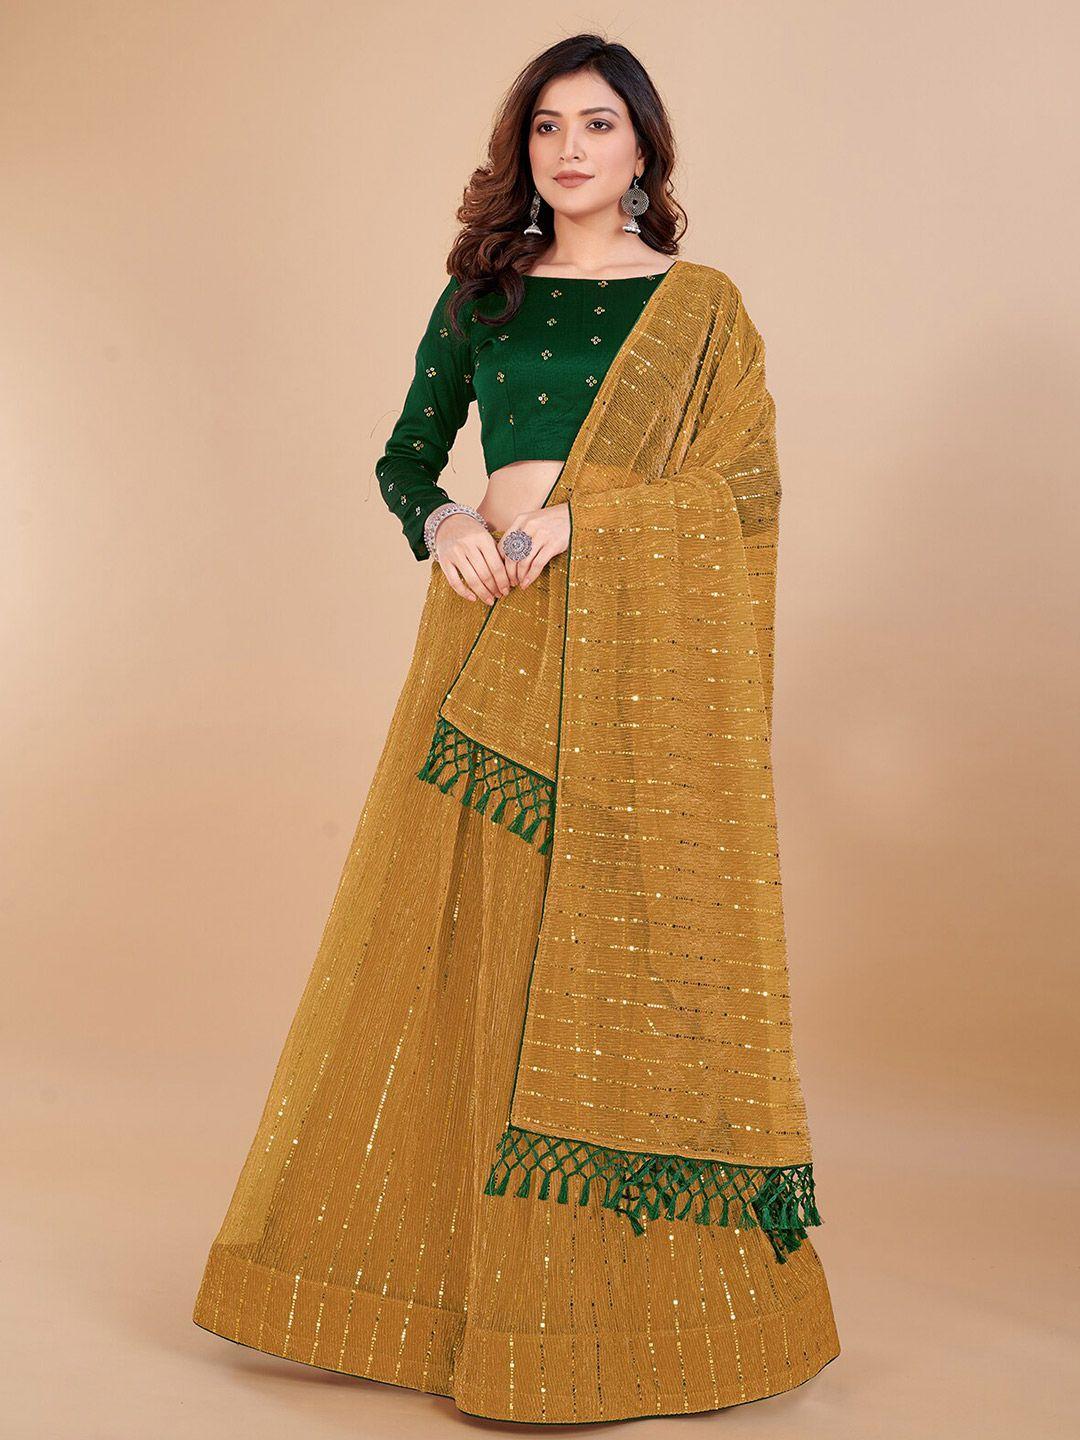 kalini sequinned embellished semi-stitched lehenga & unstitched blouse with dupatta